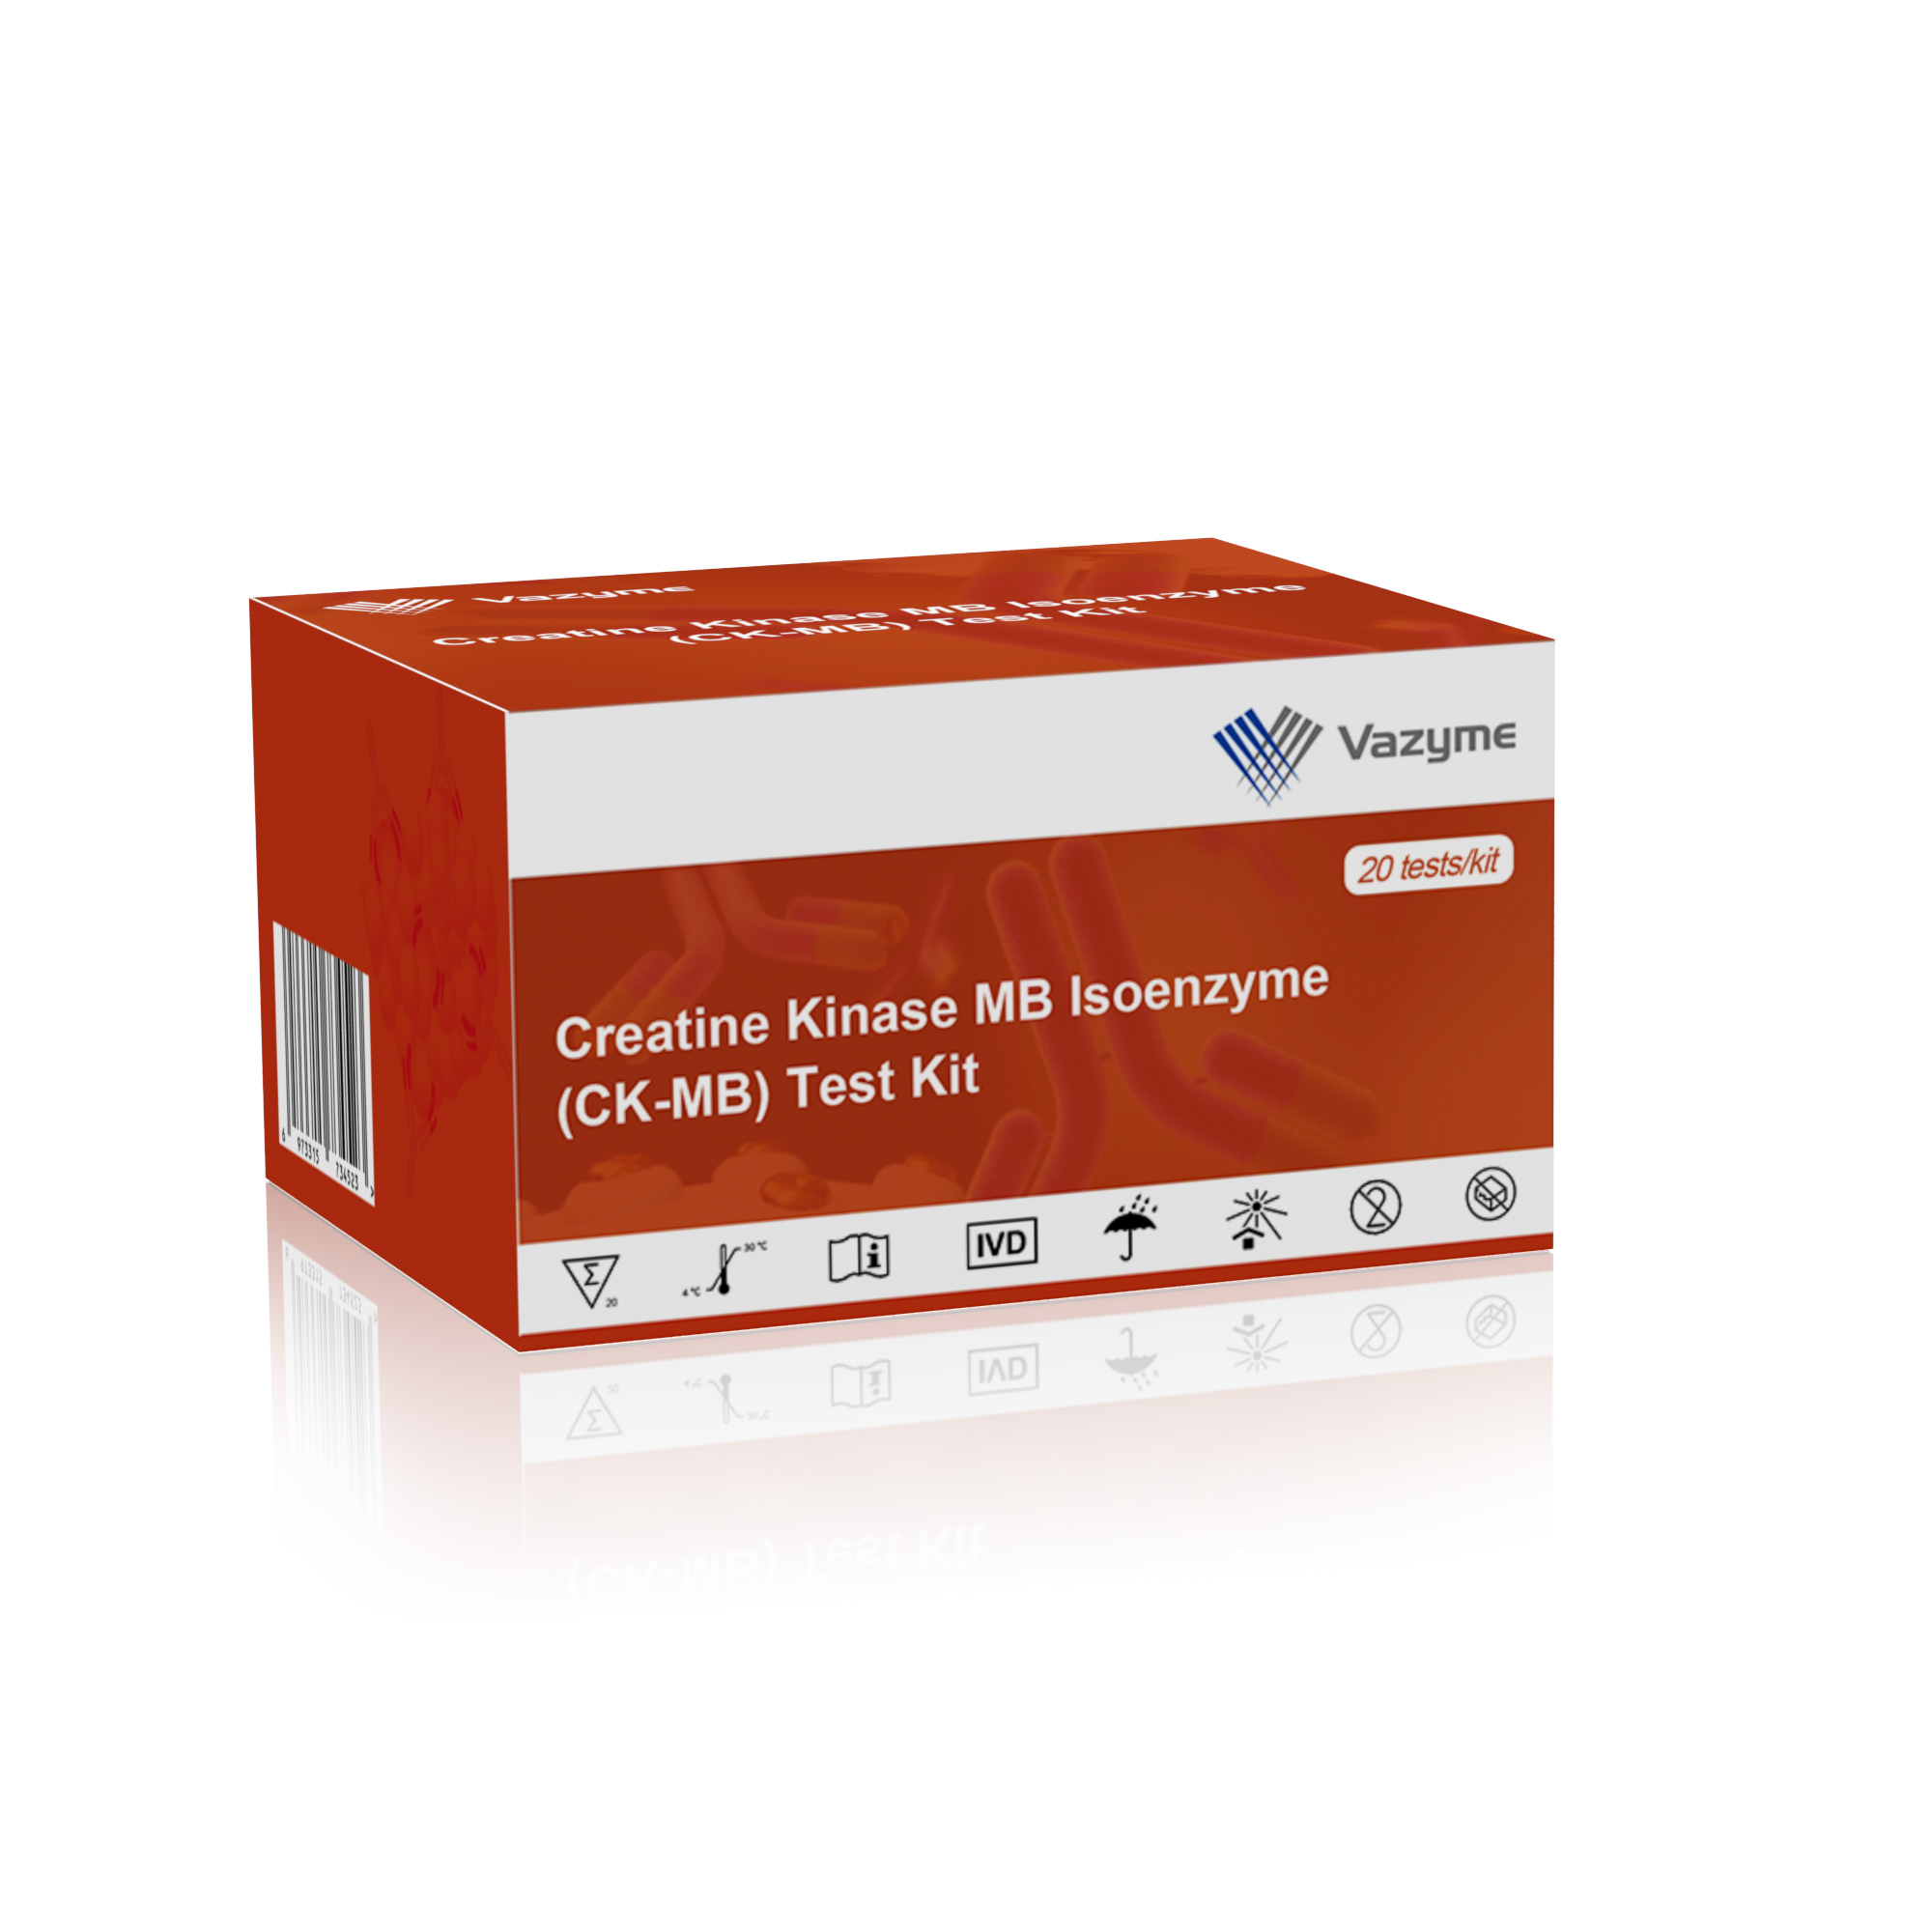 Creatine Kinase MB Isoenzyme (CK-MB) Test Kit (Quantum Dots Fluorescence Immunochromatography)